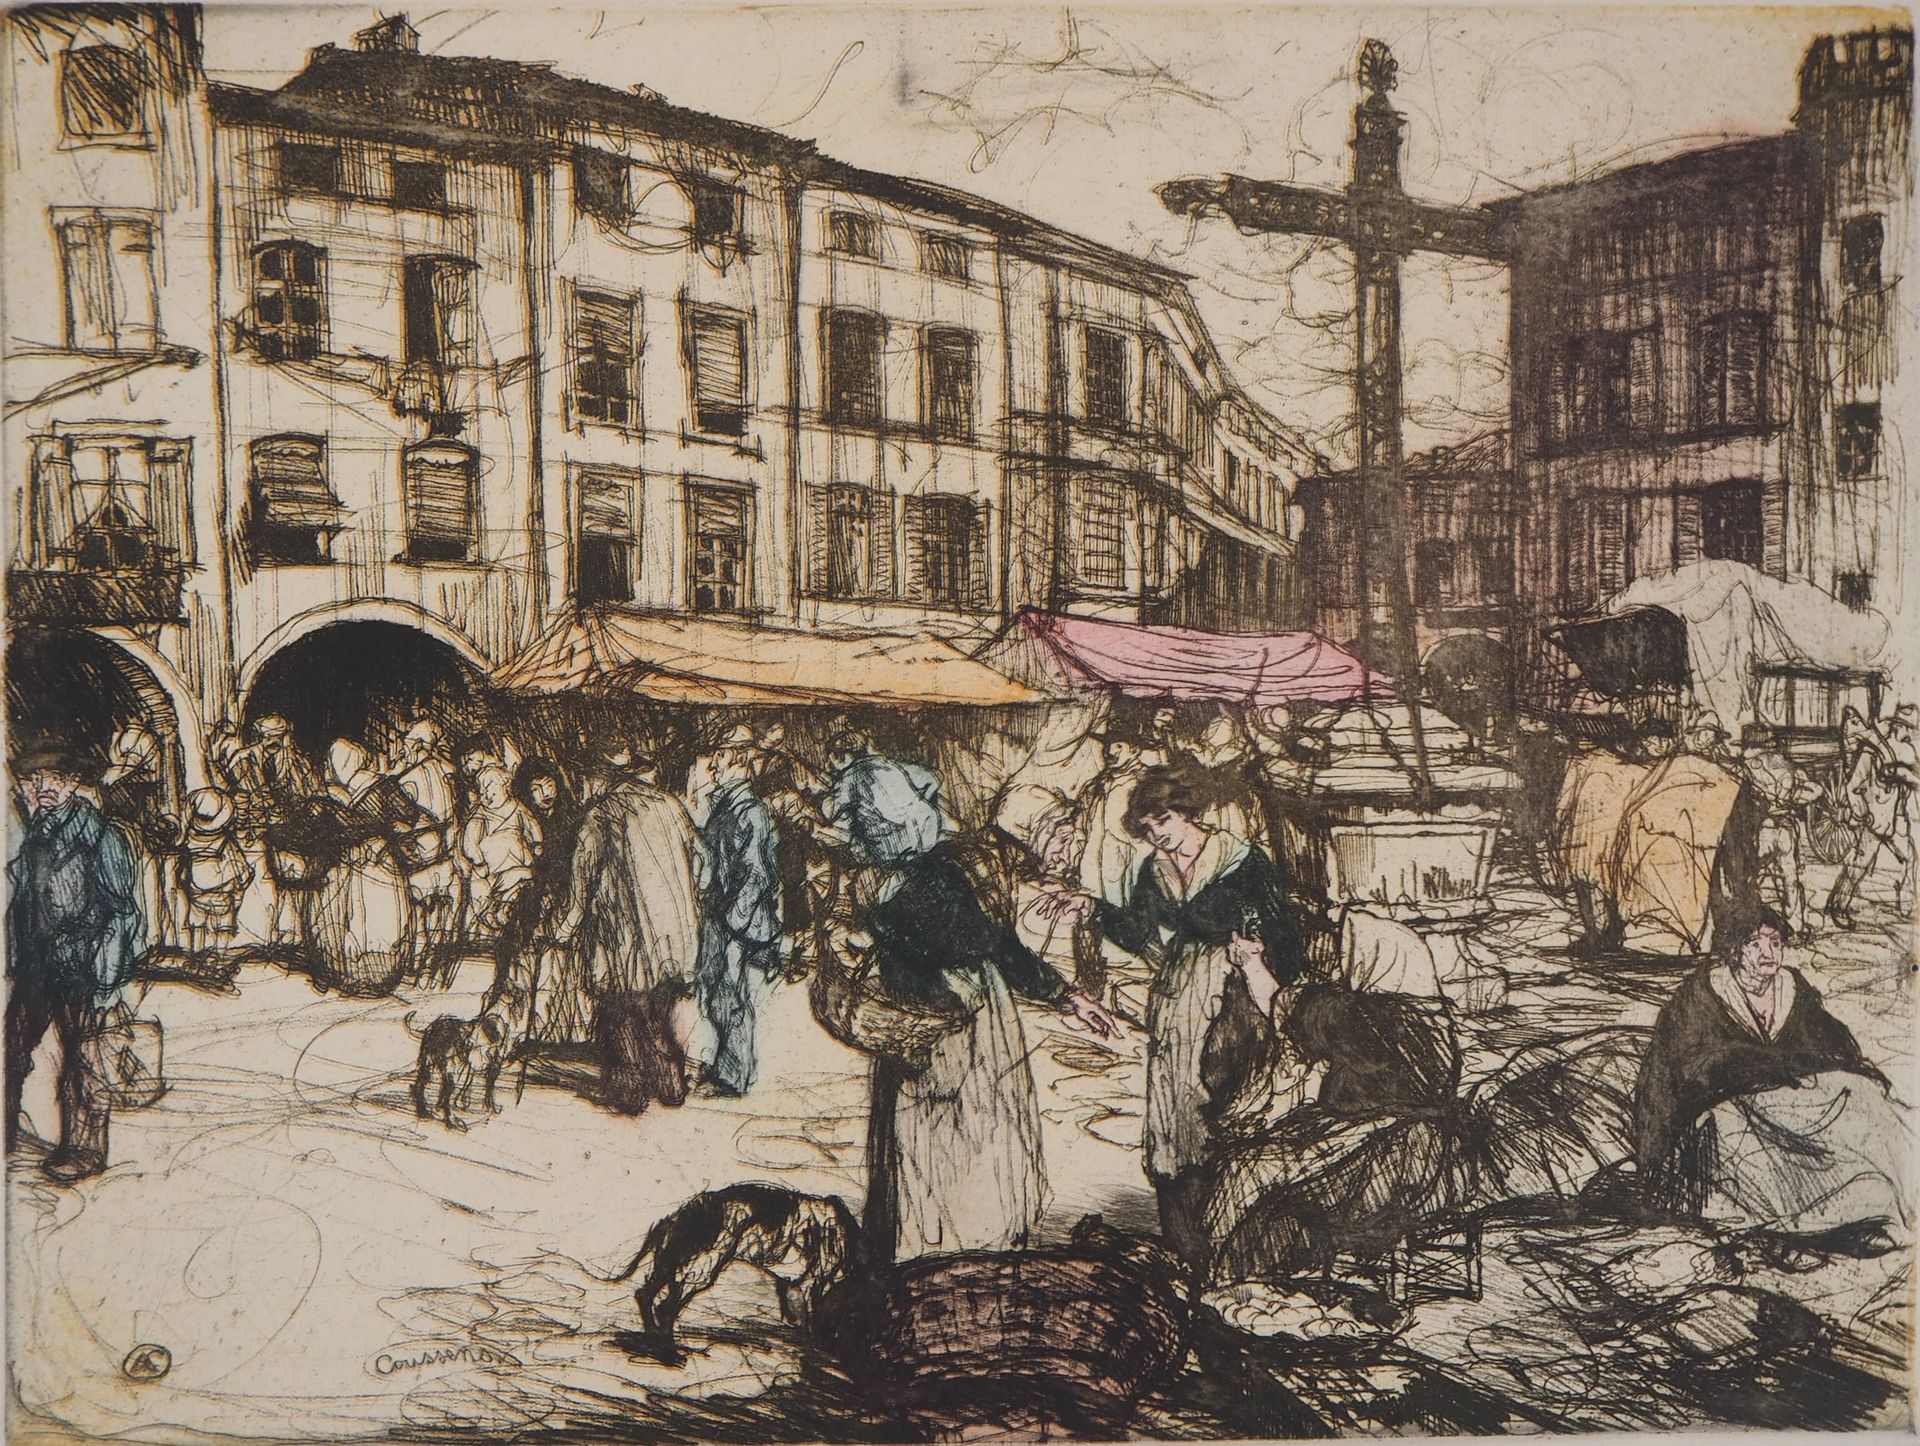 Armand COUSSENS 阿尔芒-库森斯 (1881-1935)

市场

原有的蚀刻版画用钢网加高

板块中的签名

梭织纸上 45 x 64

信息 &hellip;